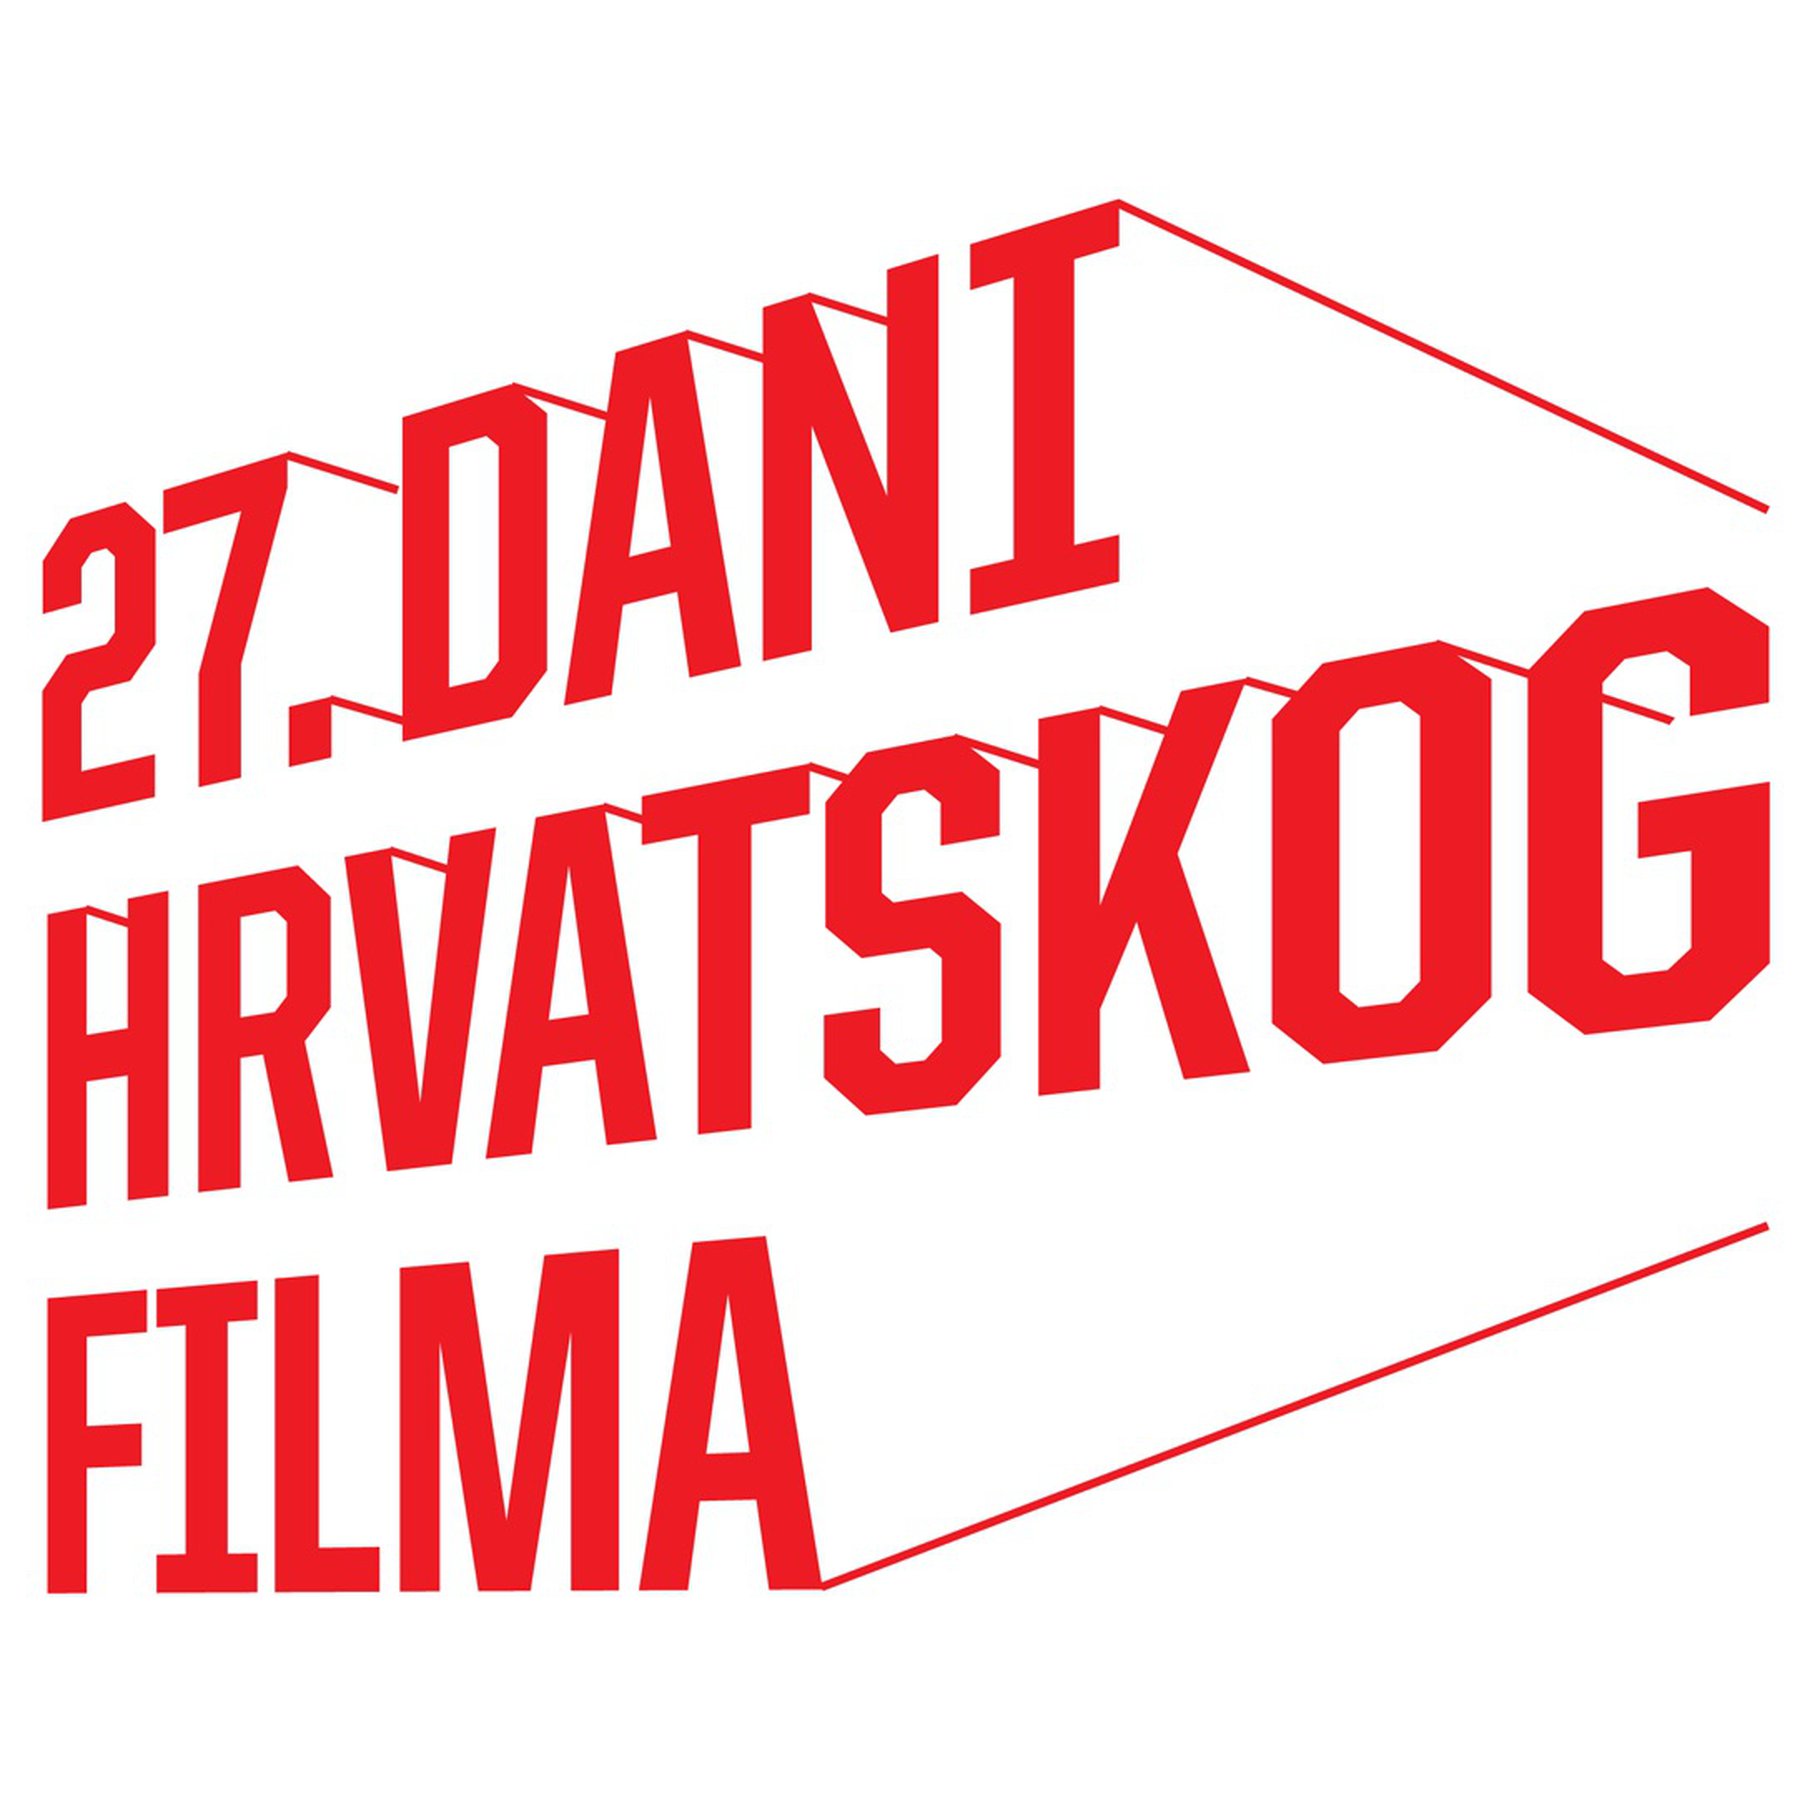 Days of Croatian film